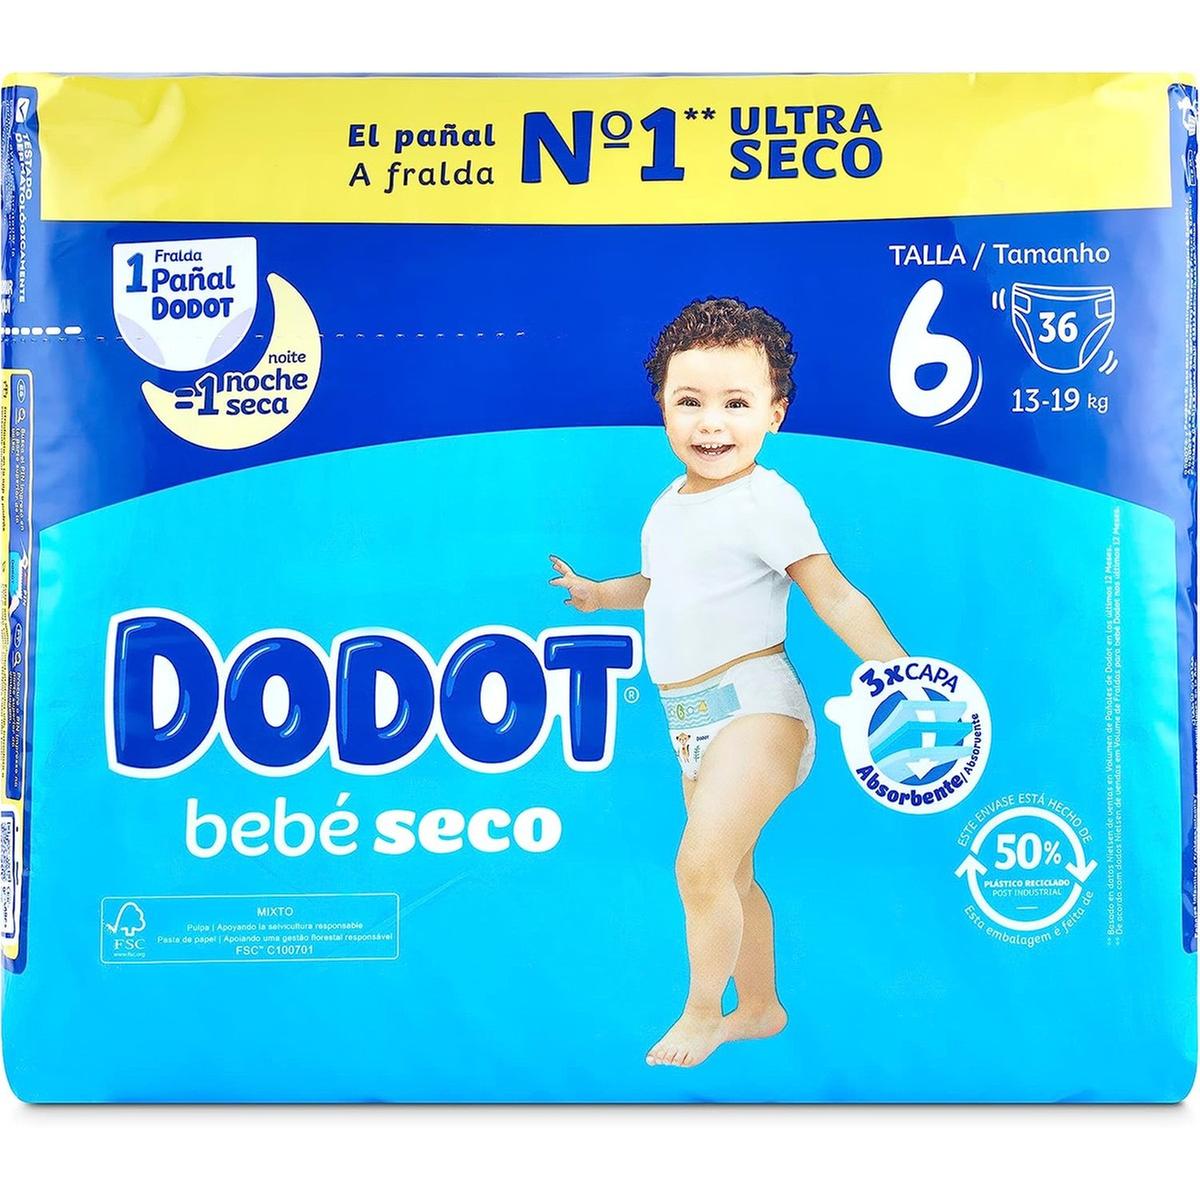 Dodot Bebé Seco Pañales Box XXL T6 13-18 KG 128 uds Online